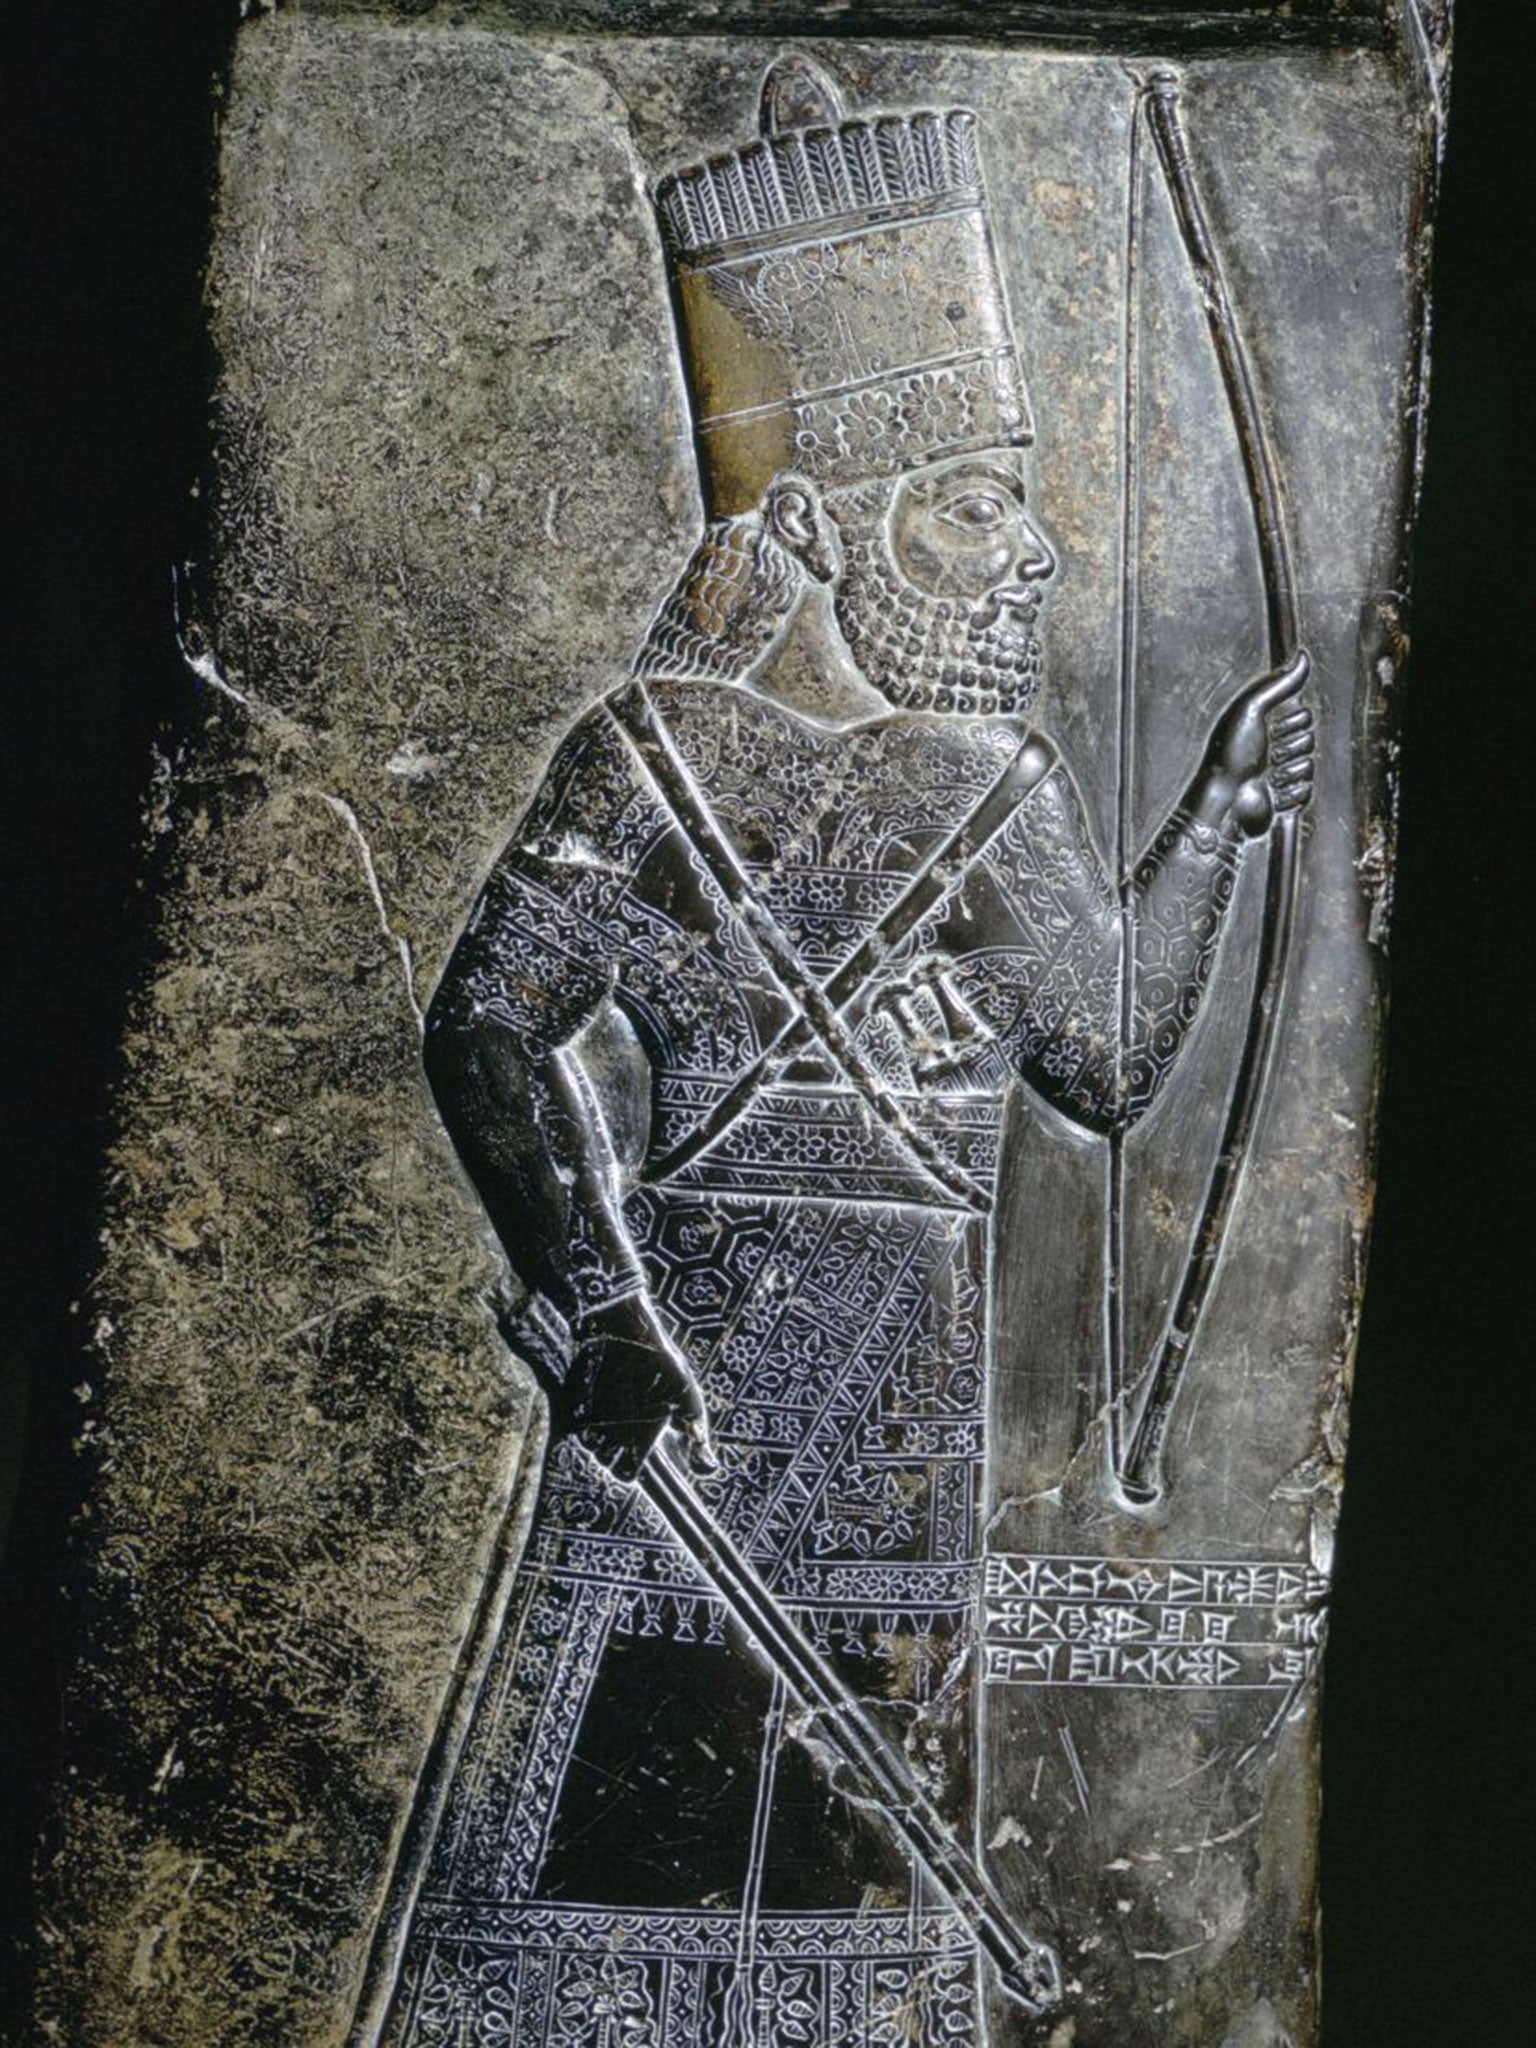 Babylonian ruler King Marduk-Nadin-Akke pictured on a boundary stone